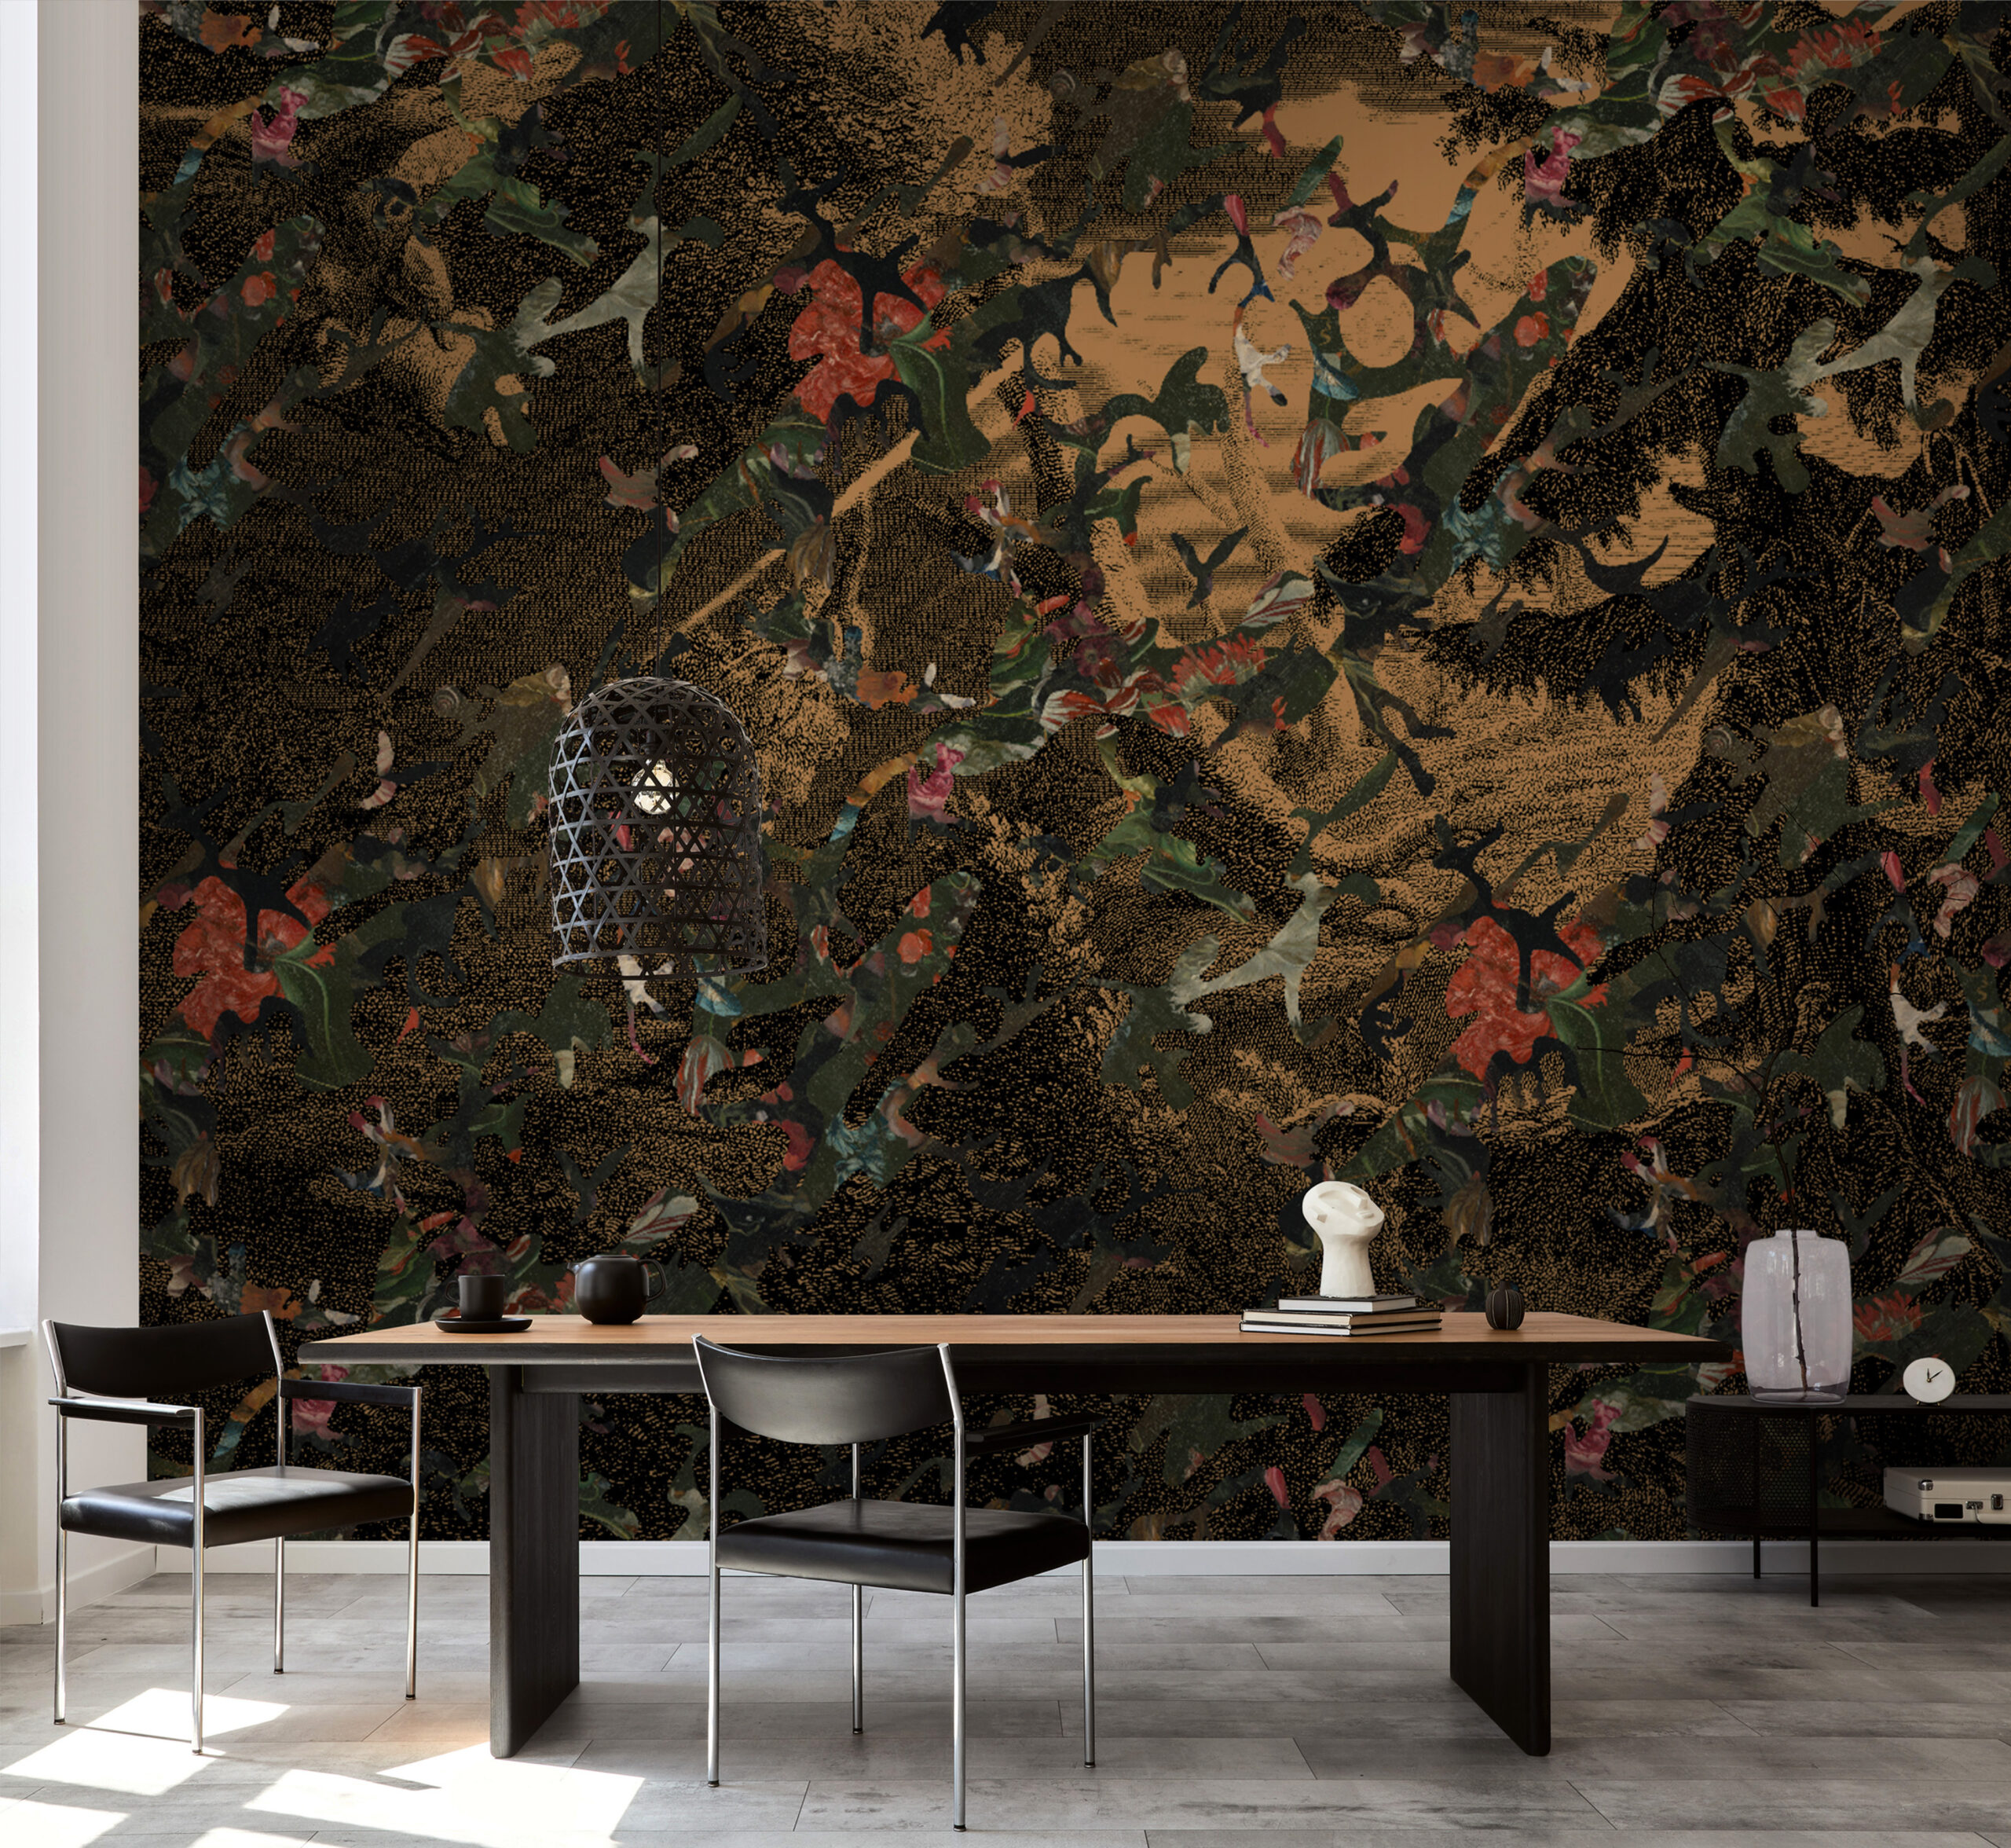 Paradis-Perdu-MaVoix-wallpaper-by-Magnus-Gjoen-frescoes-Collezione-Visioni-living-room